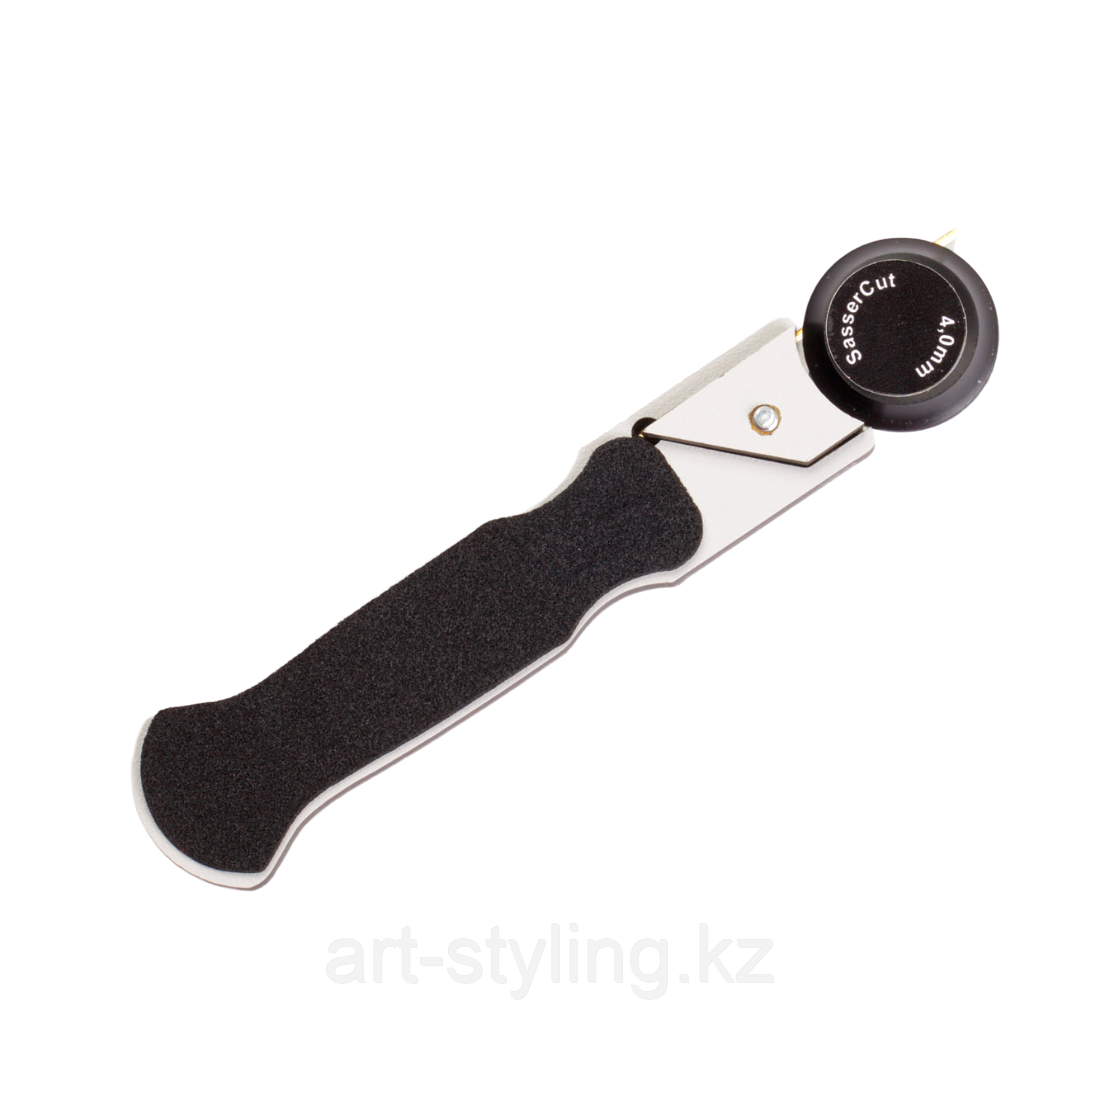 Нож YT SasserCut PRO 5.3мм для резки пленки в зазорах между авто-деталями кузова